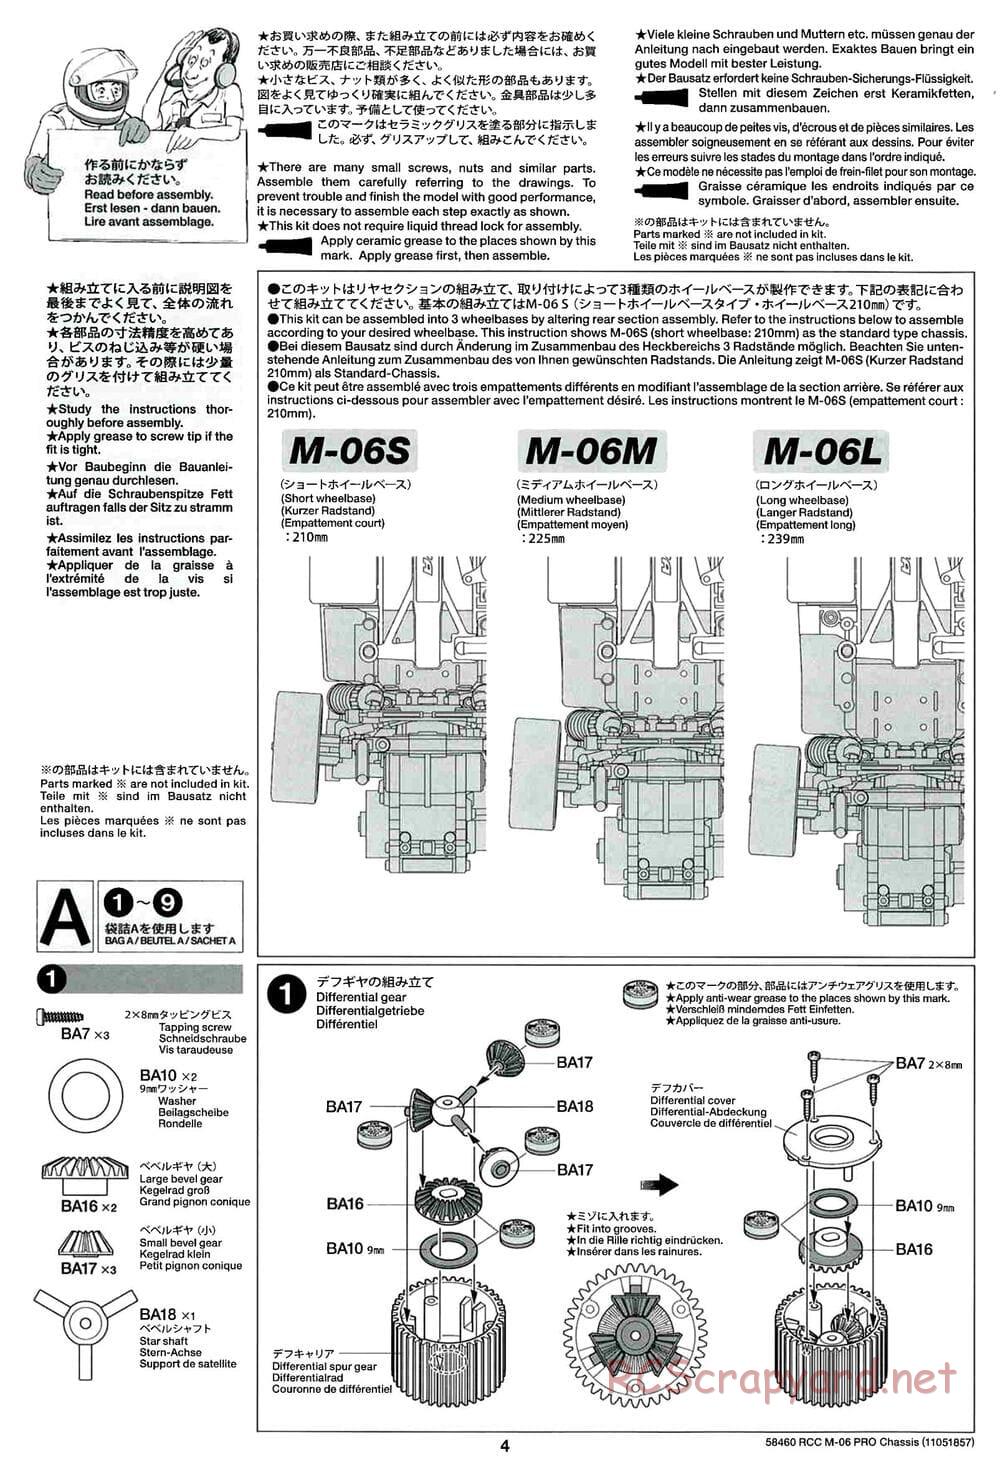 Tamiya - M-06 Pro Chassis - Manual - Page 4